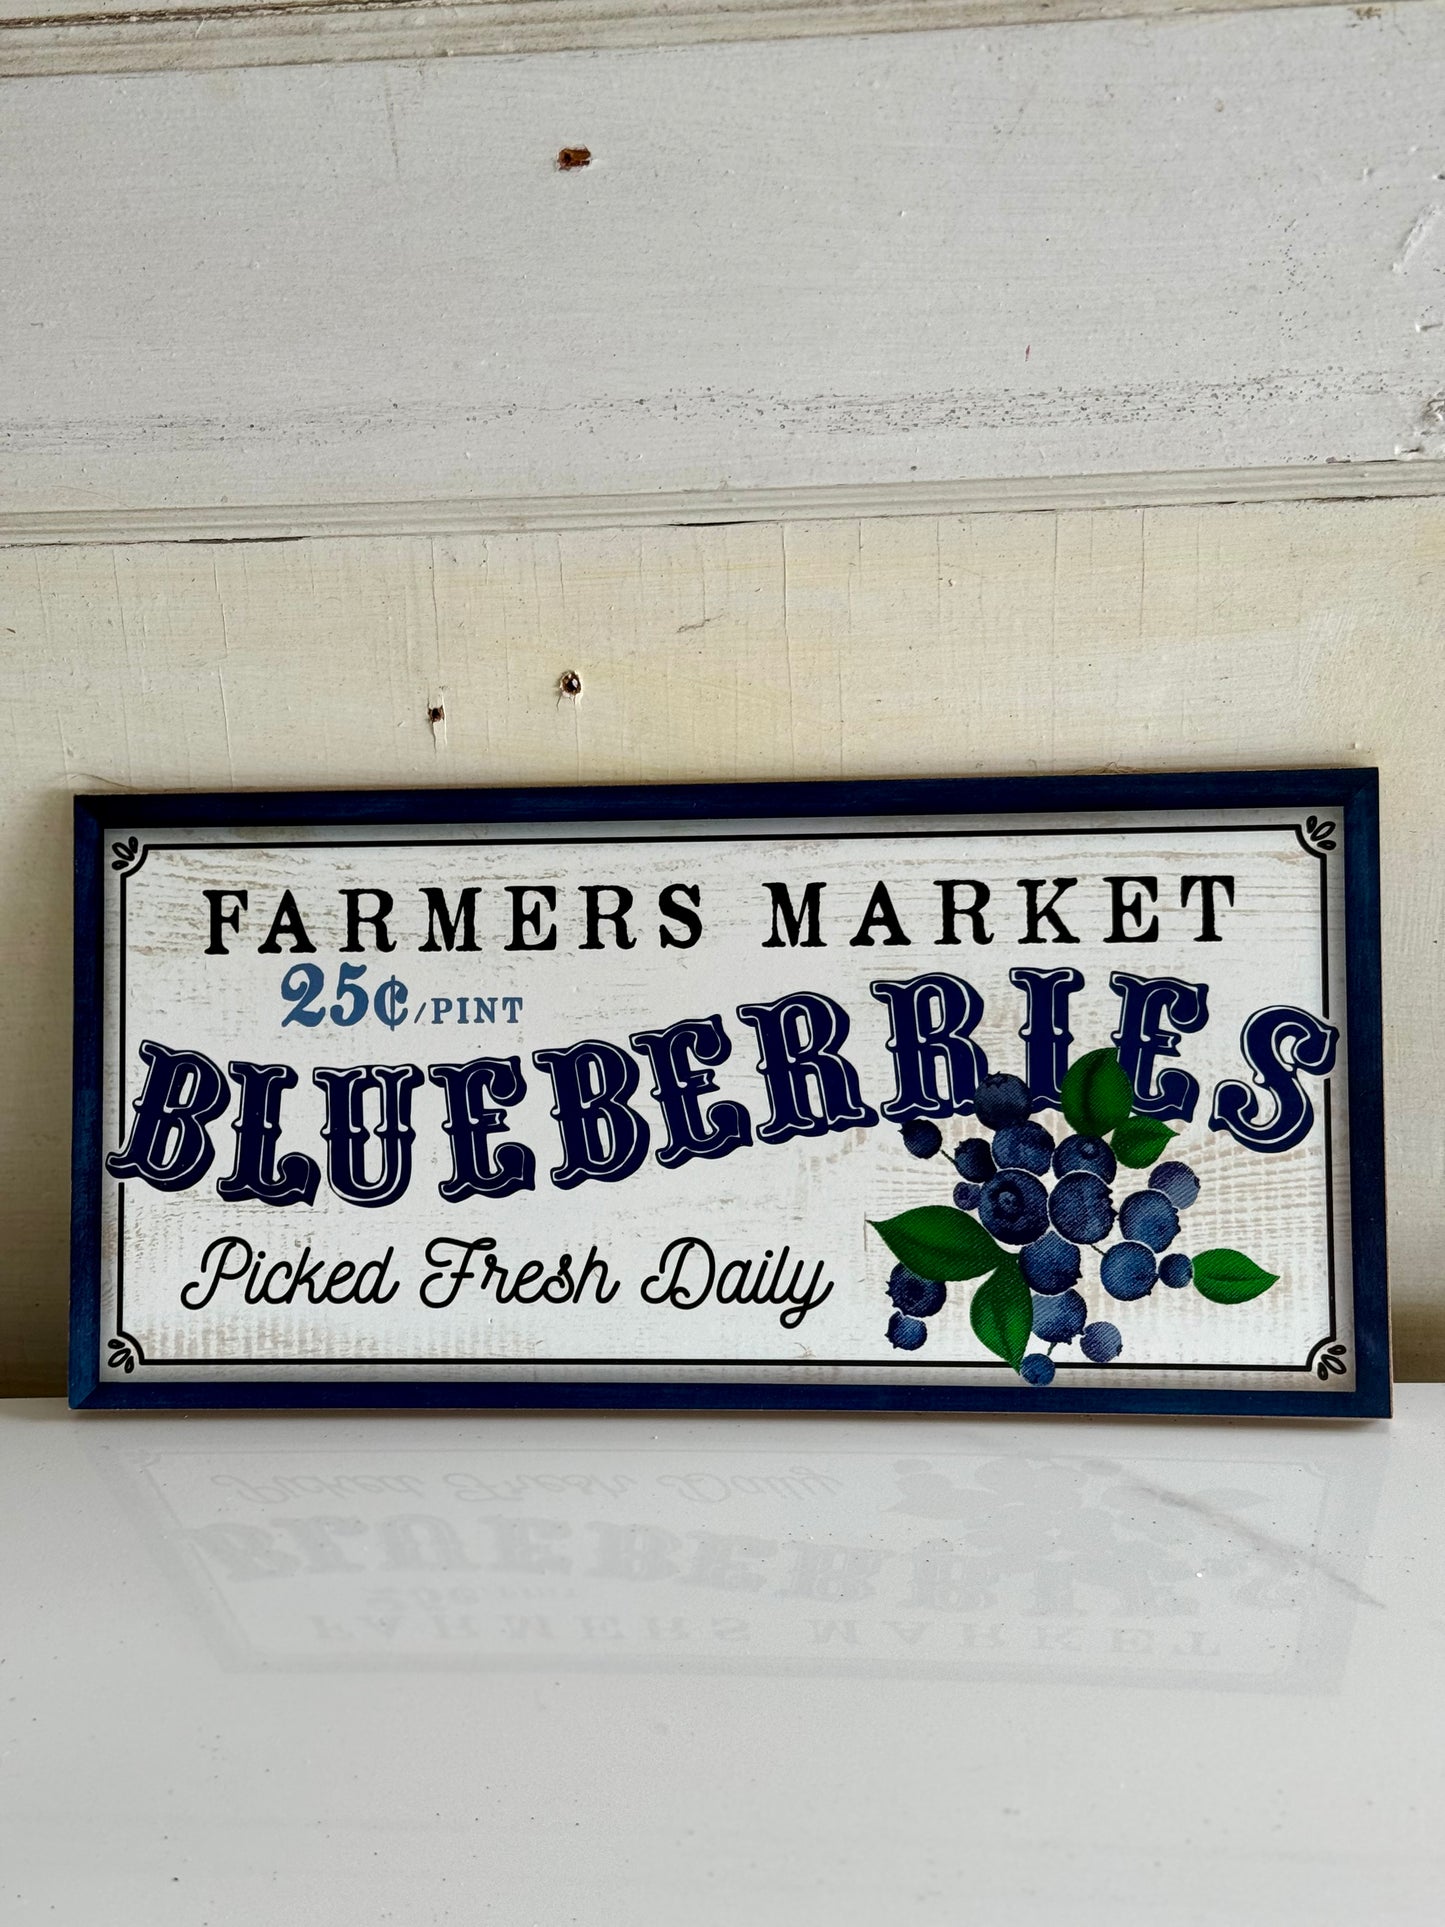 Farmers Market Blueberries Wooden Sign